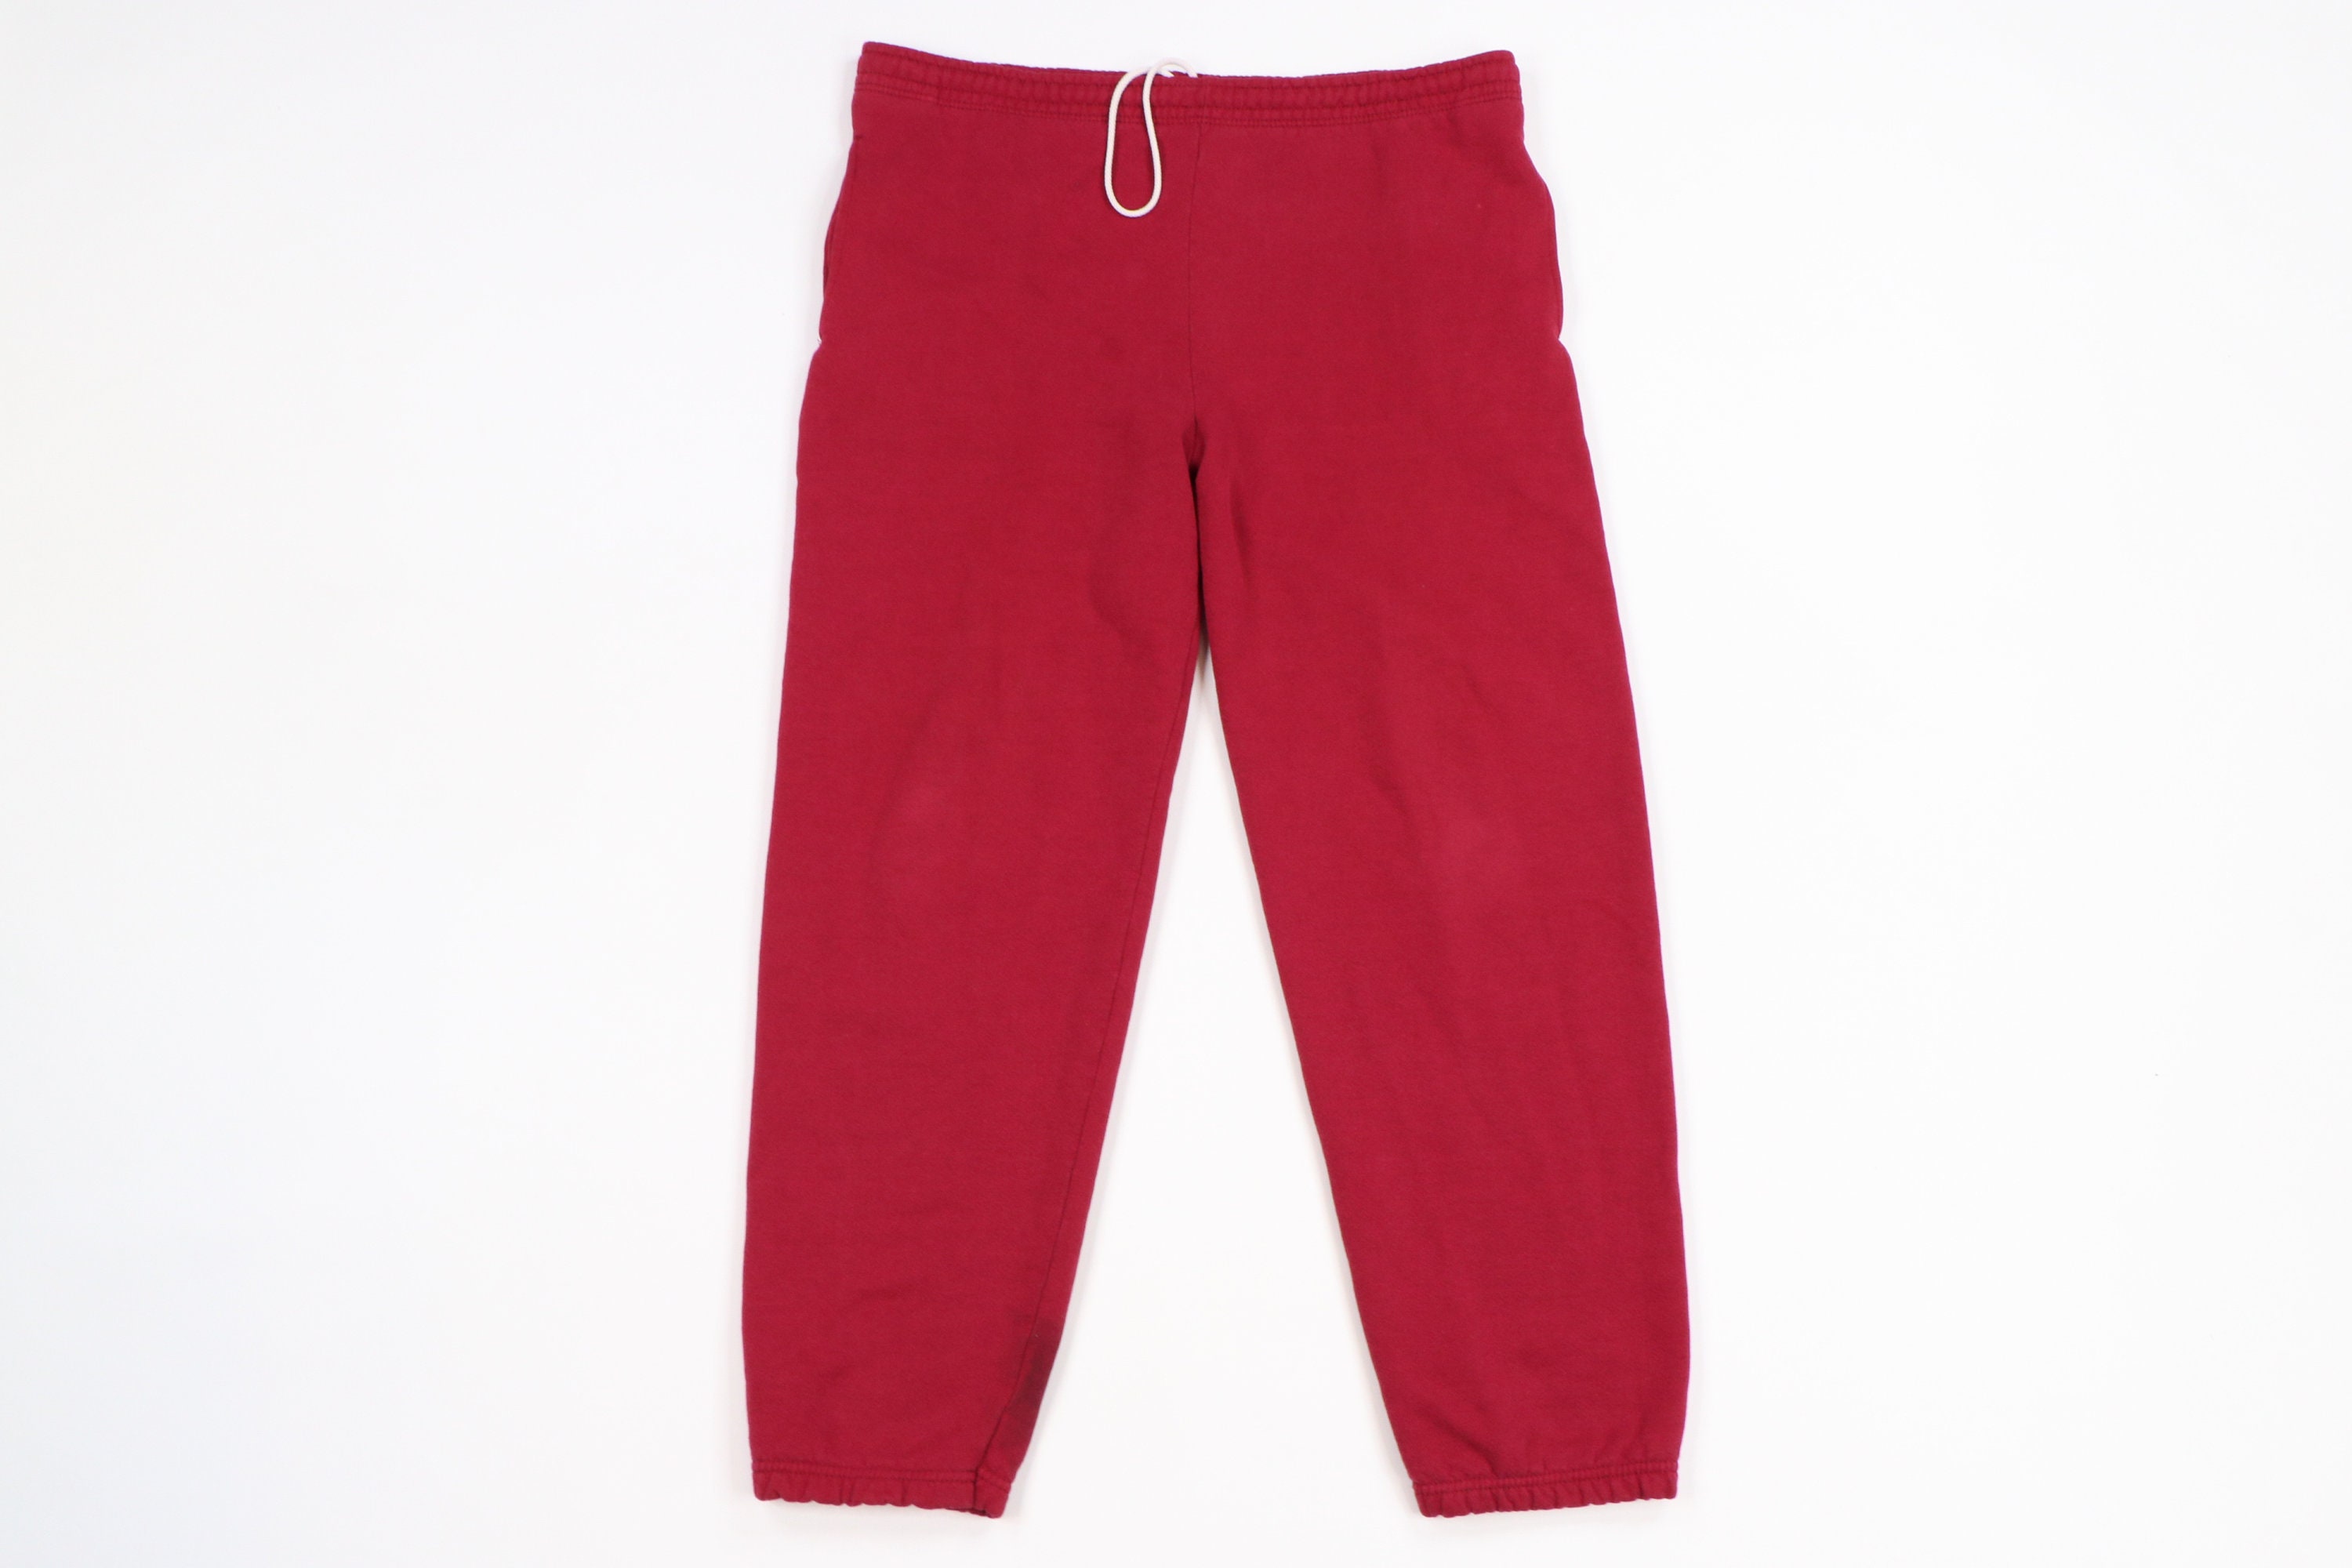 90s Streetwear Blank Faded Distressed Sweatpants Joggers Red - Etsy